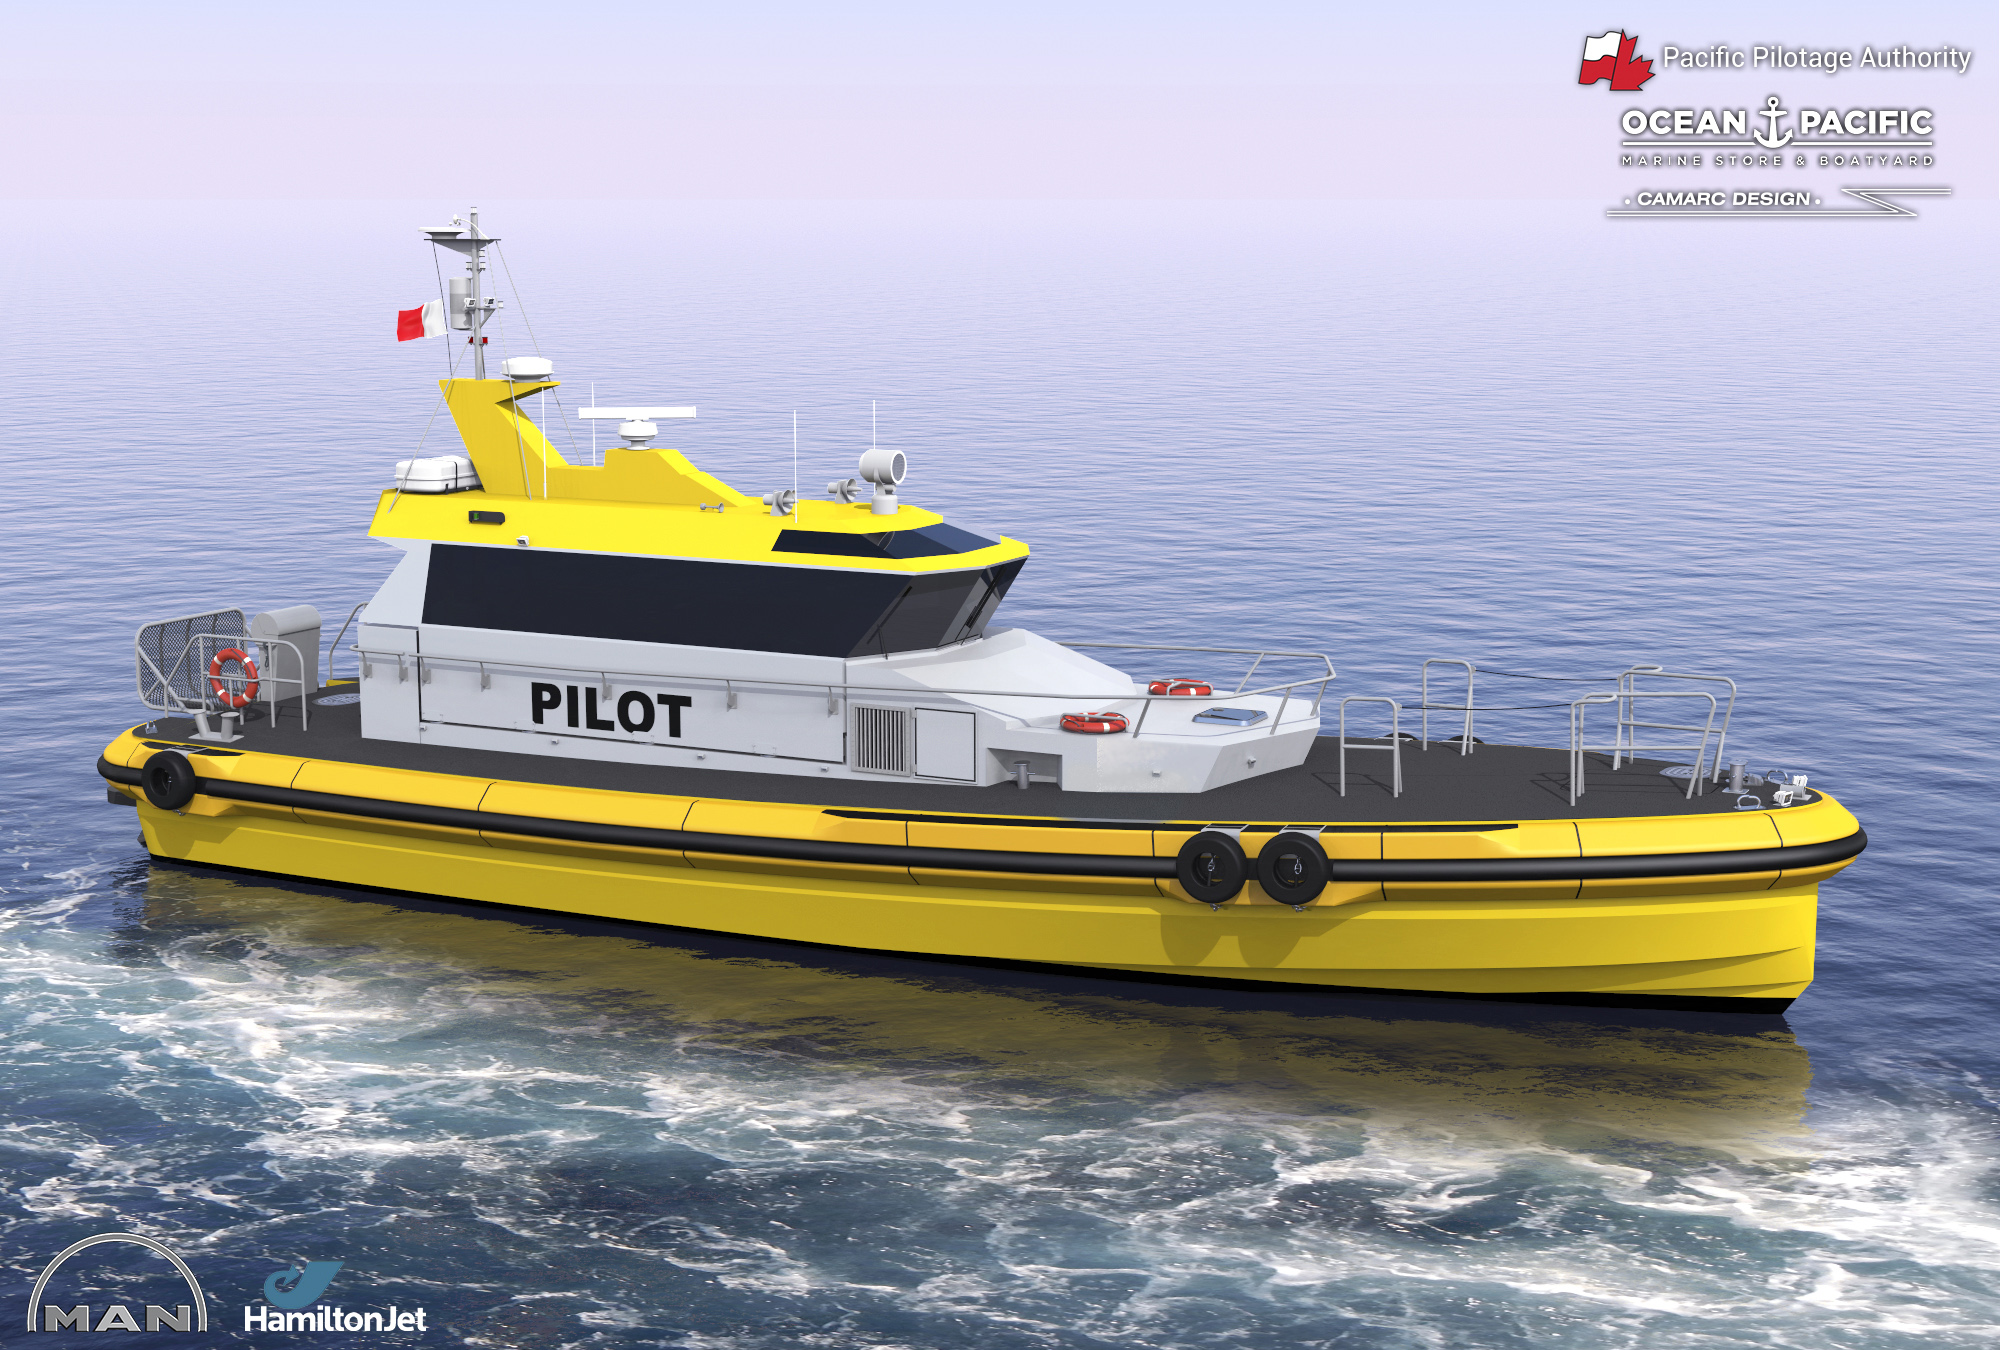 New Pilot boat project